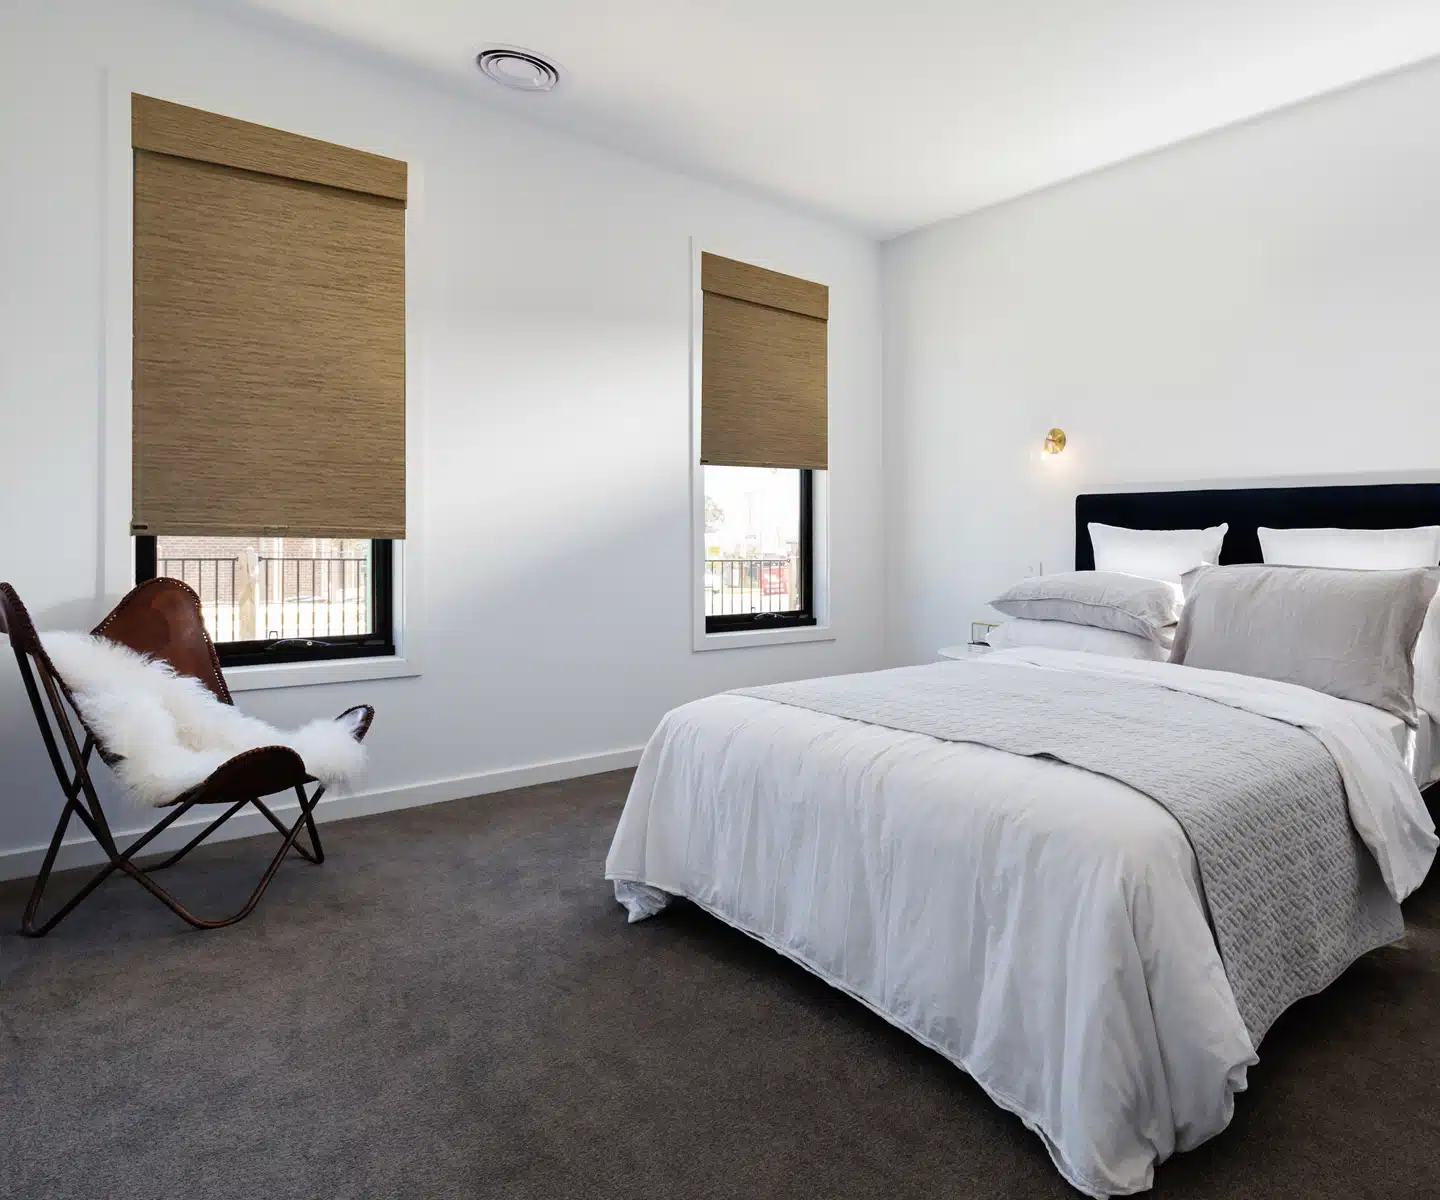 Near Bethesda, MD, sleek and sophisticated, Soluna Roller Shades in a modern bedroom